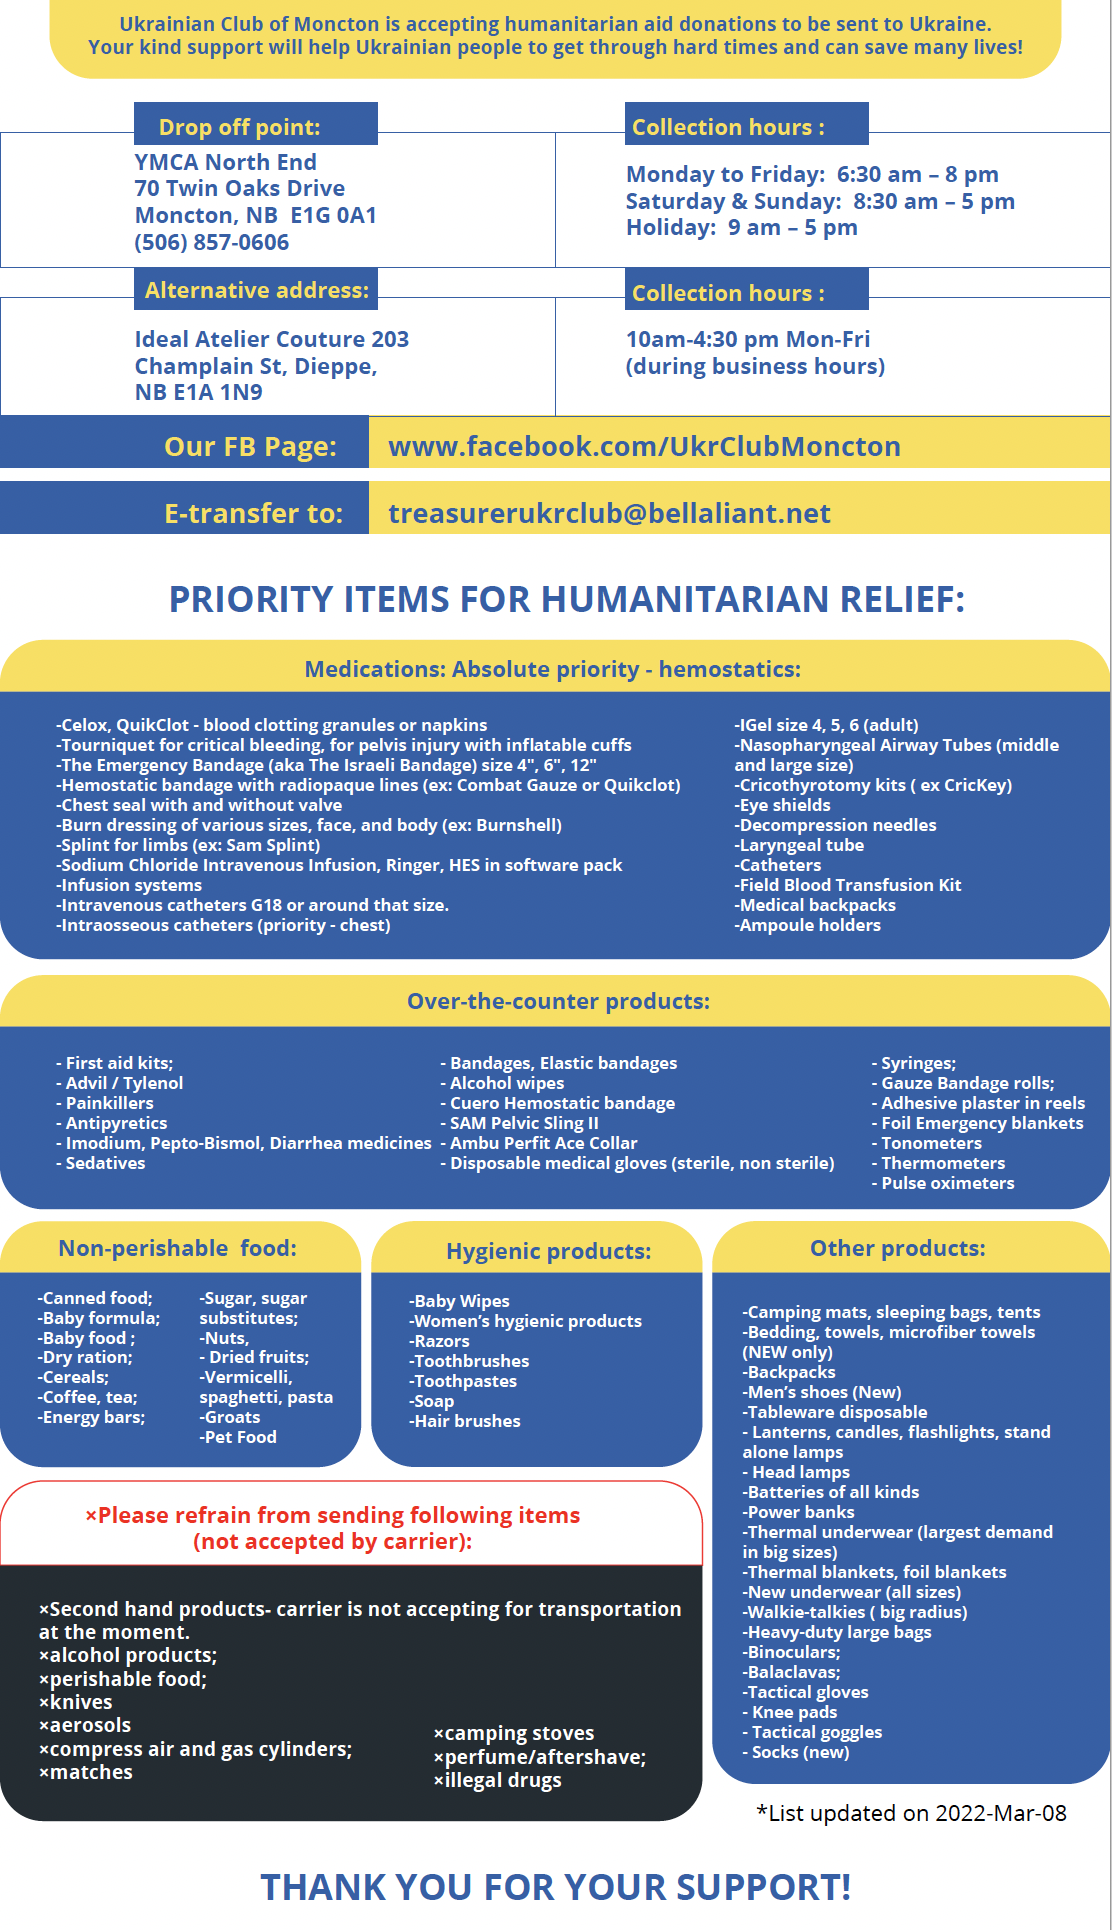 Humanitarian aid collection